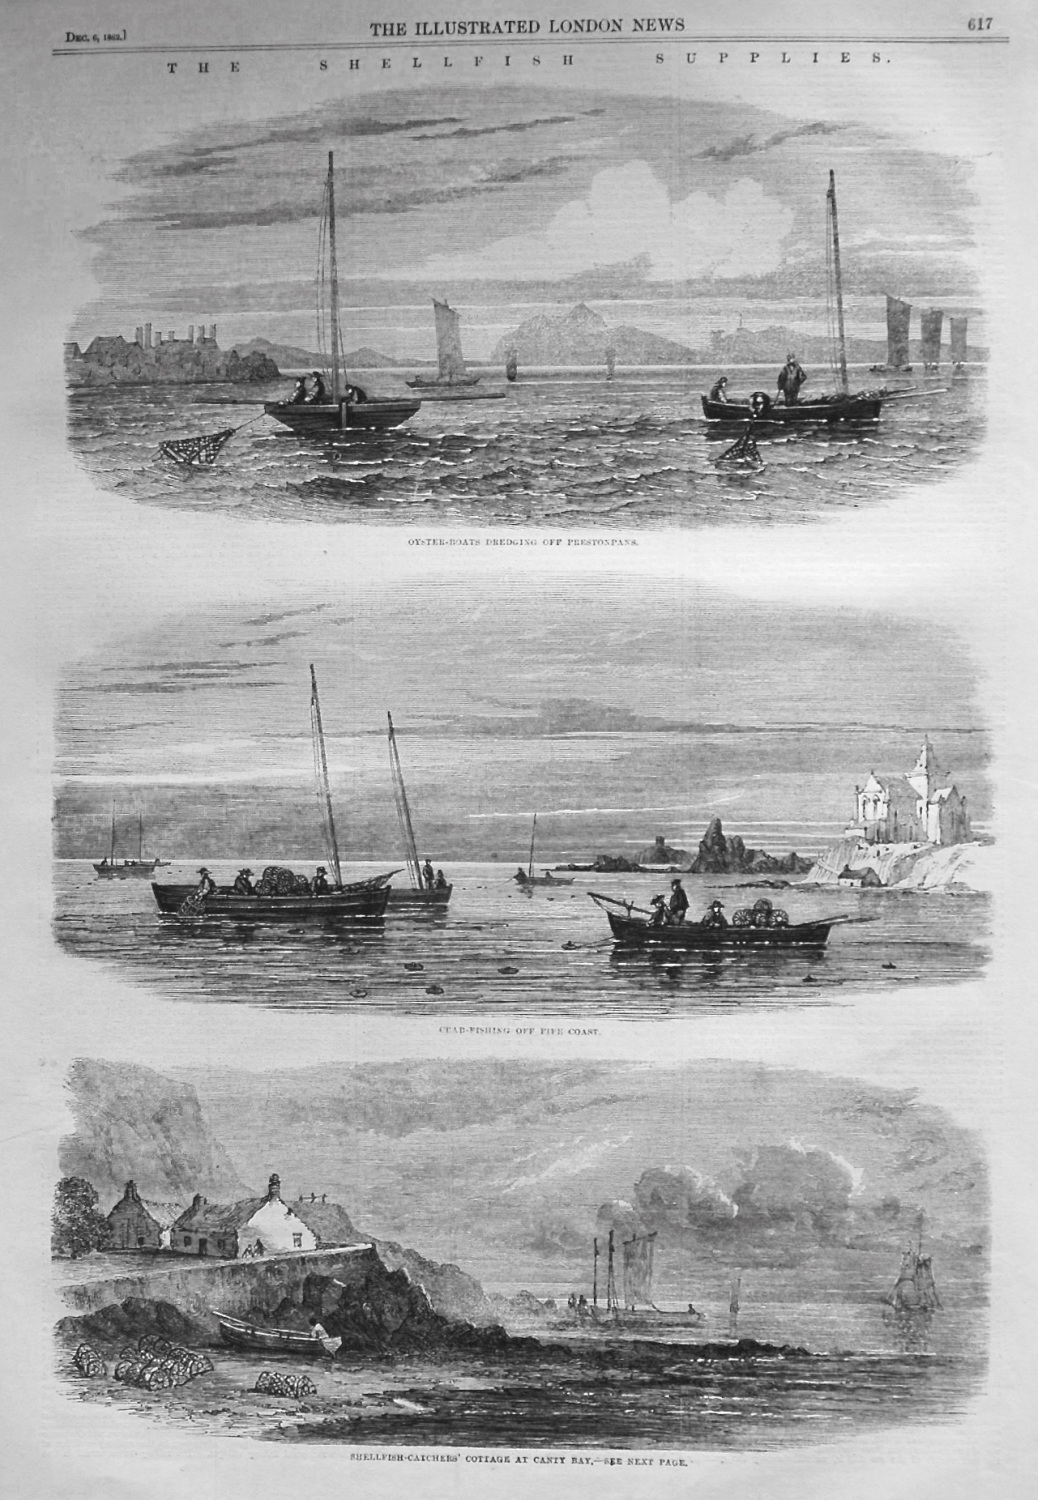 The Shellfish Supplies. 1862